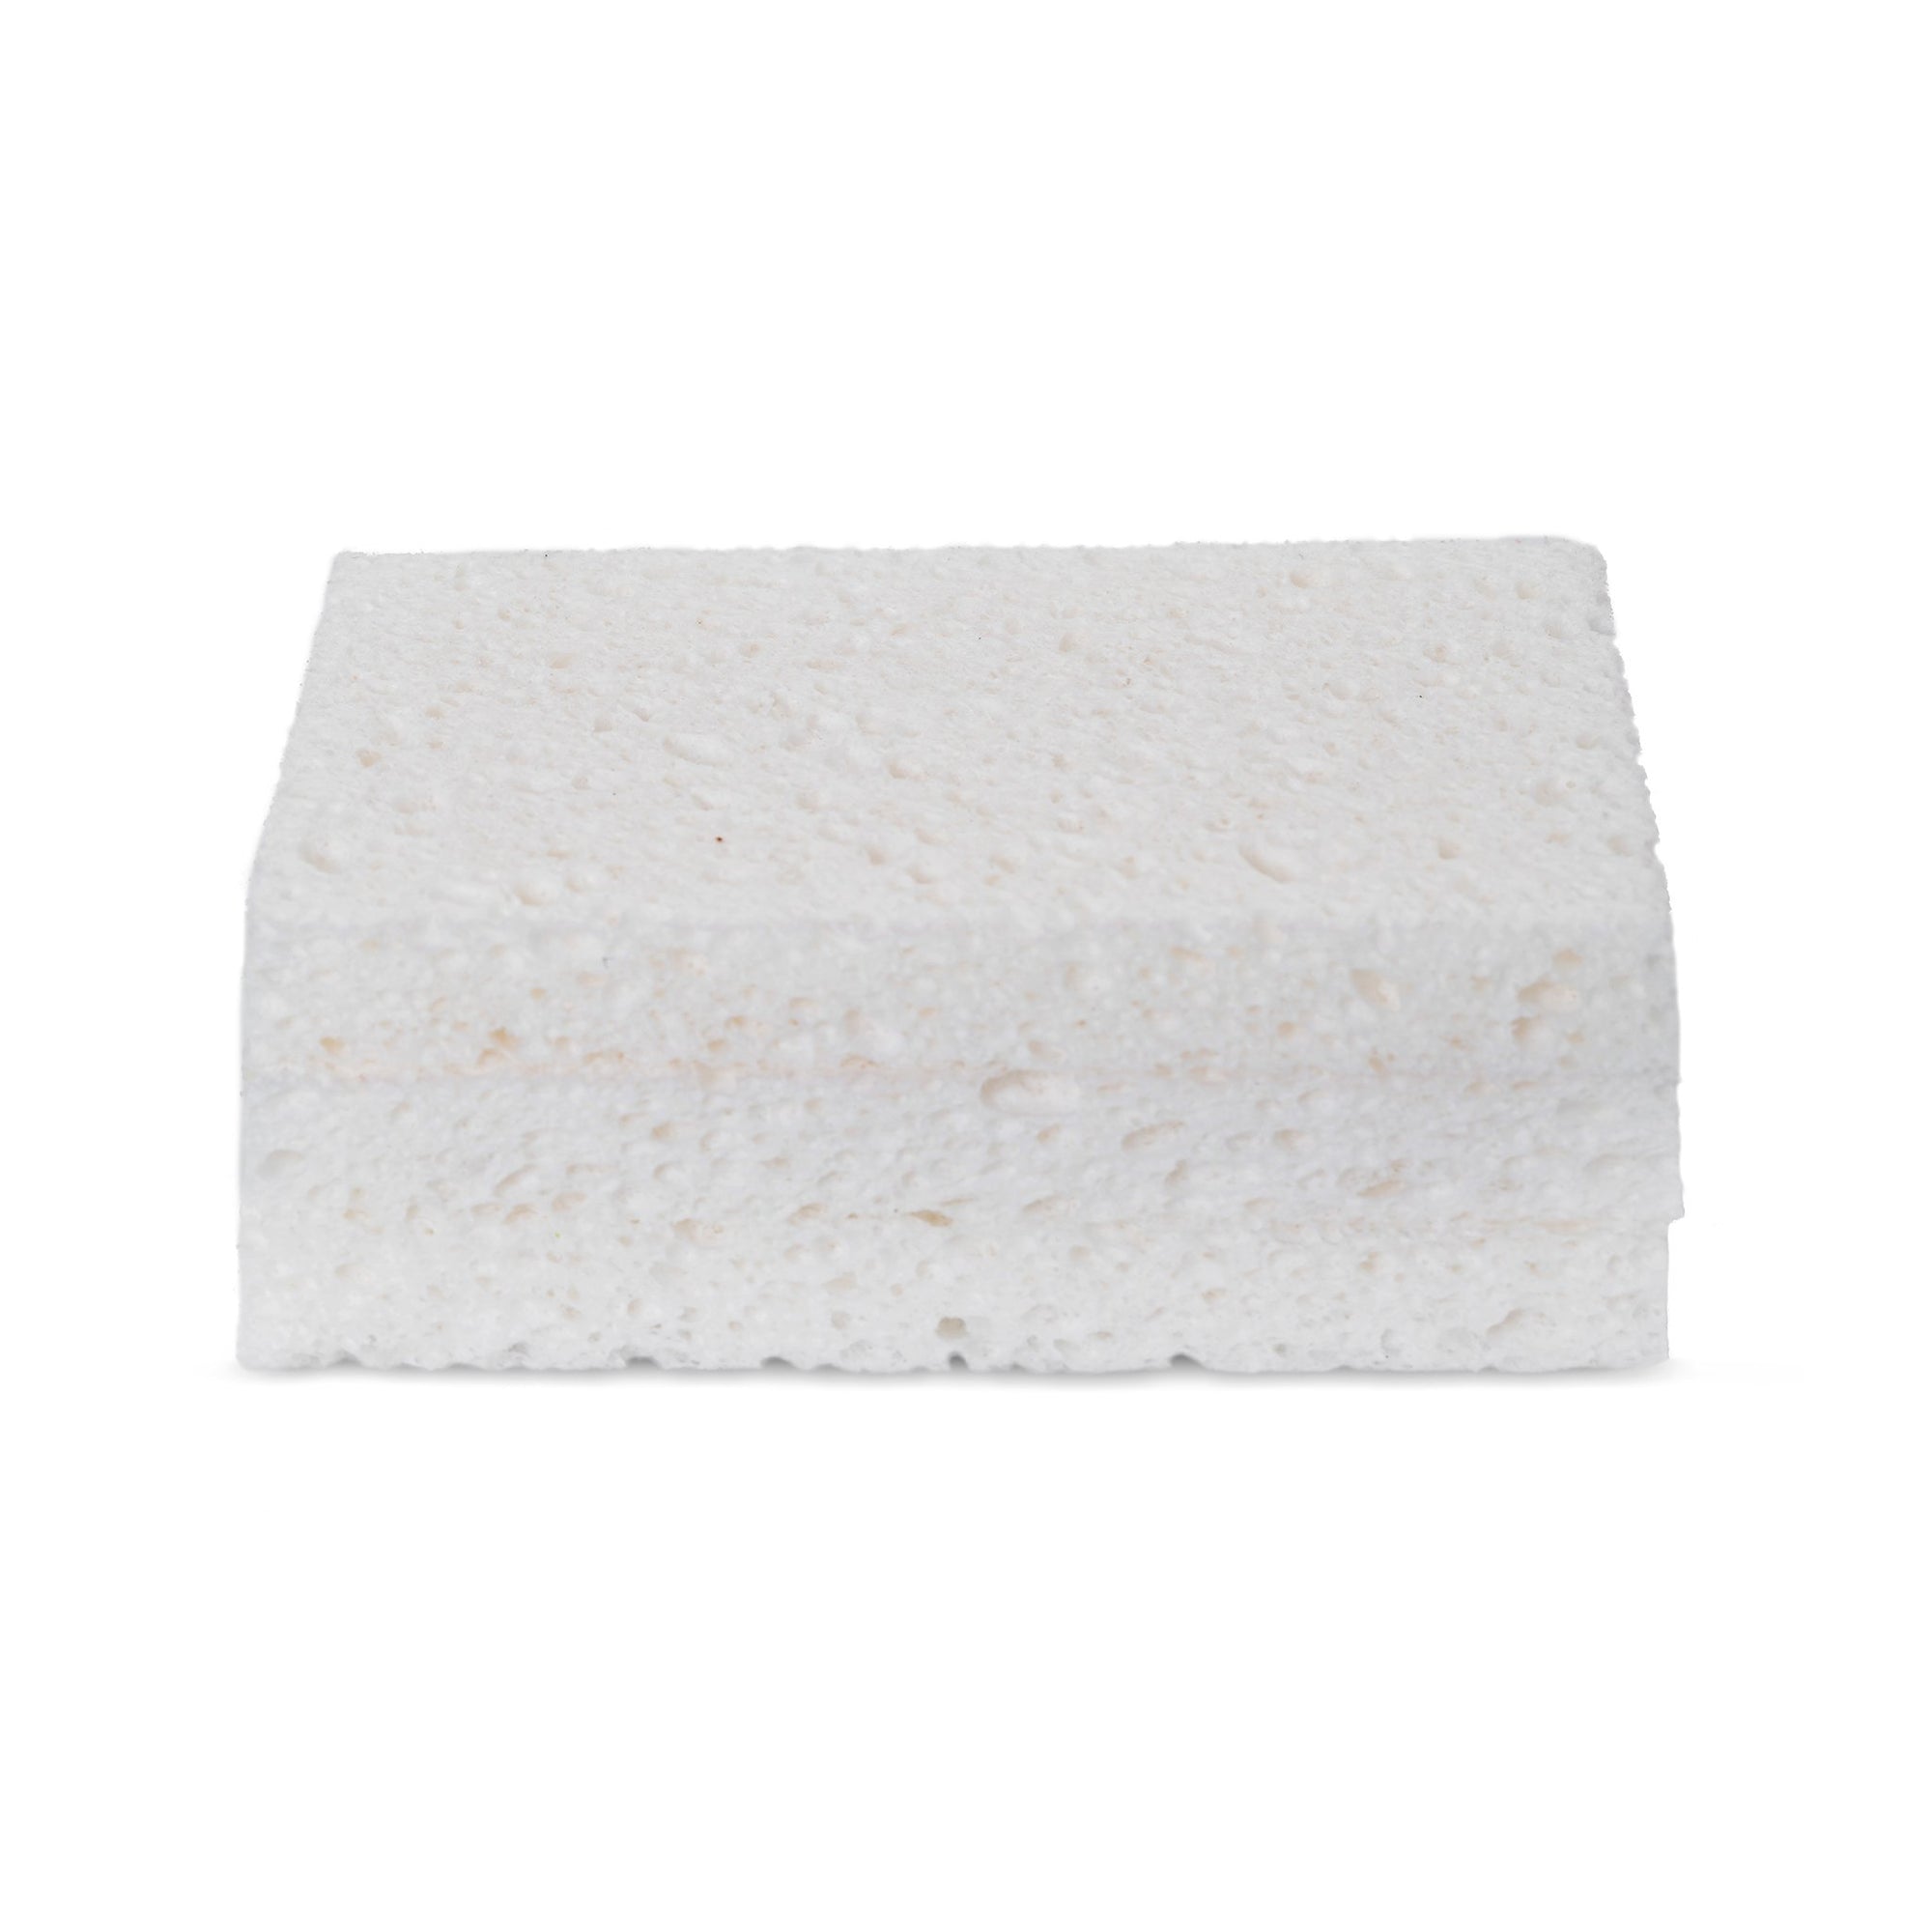 Large Cellulose Sponge Block - Full Circle Chemical